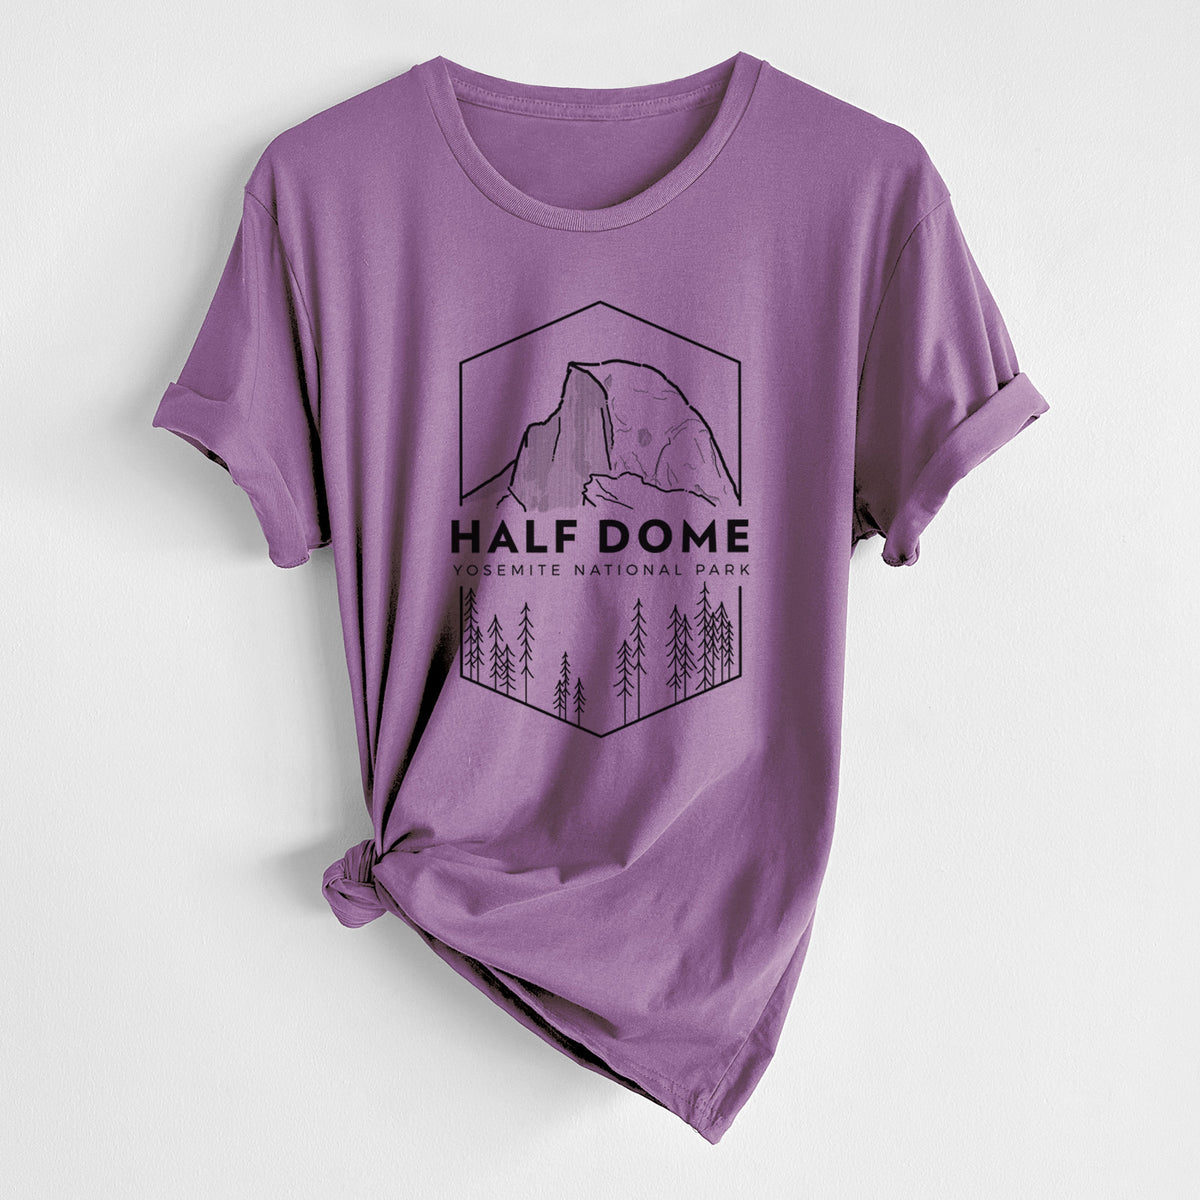 Half Dome - Yosemite National Park - Unisex Crewneck - Made in USA - 100% Organic Cotton